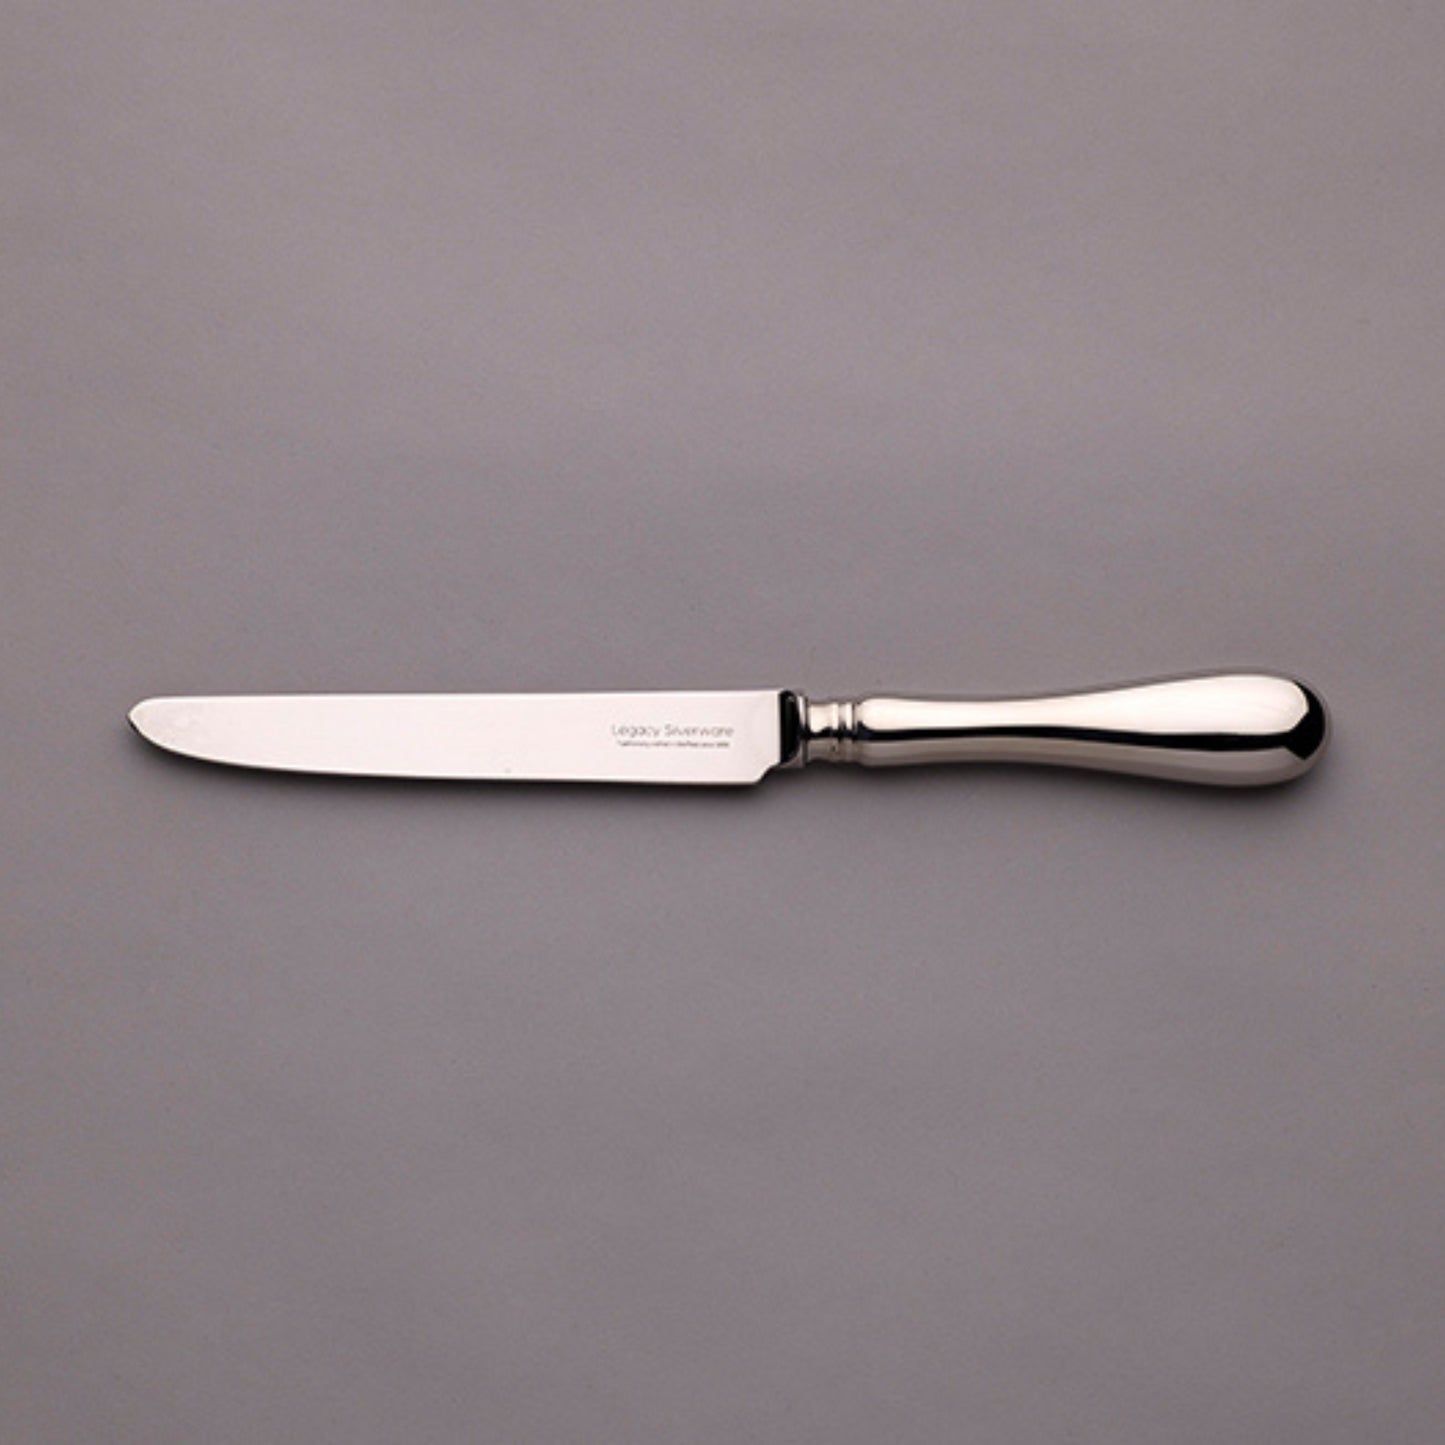 Plain Fiddle silver plated flatware cutlery